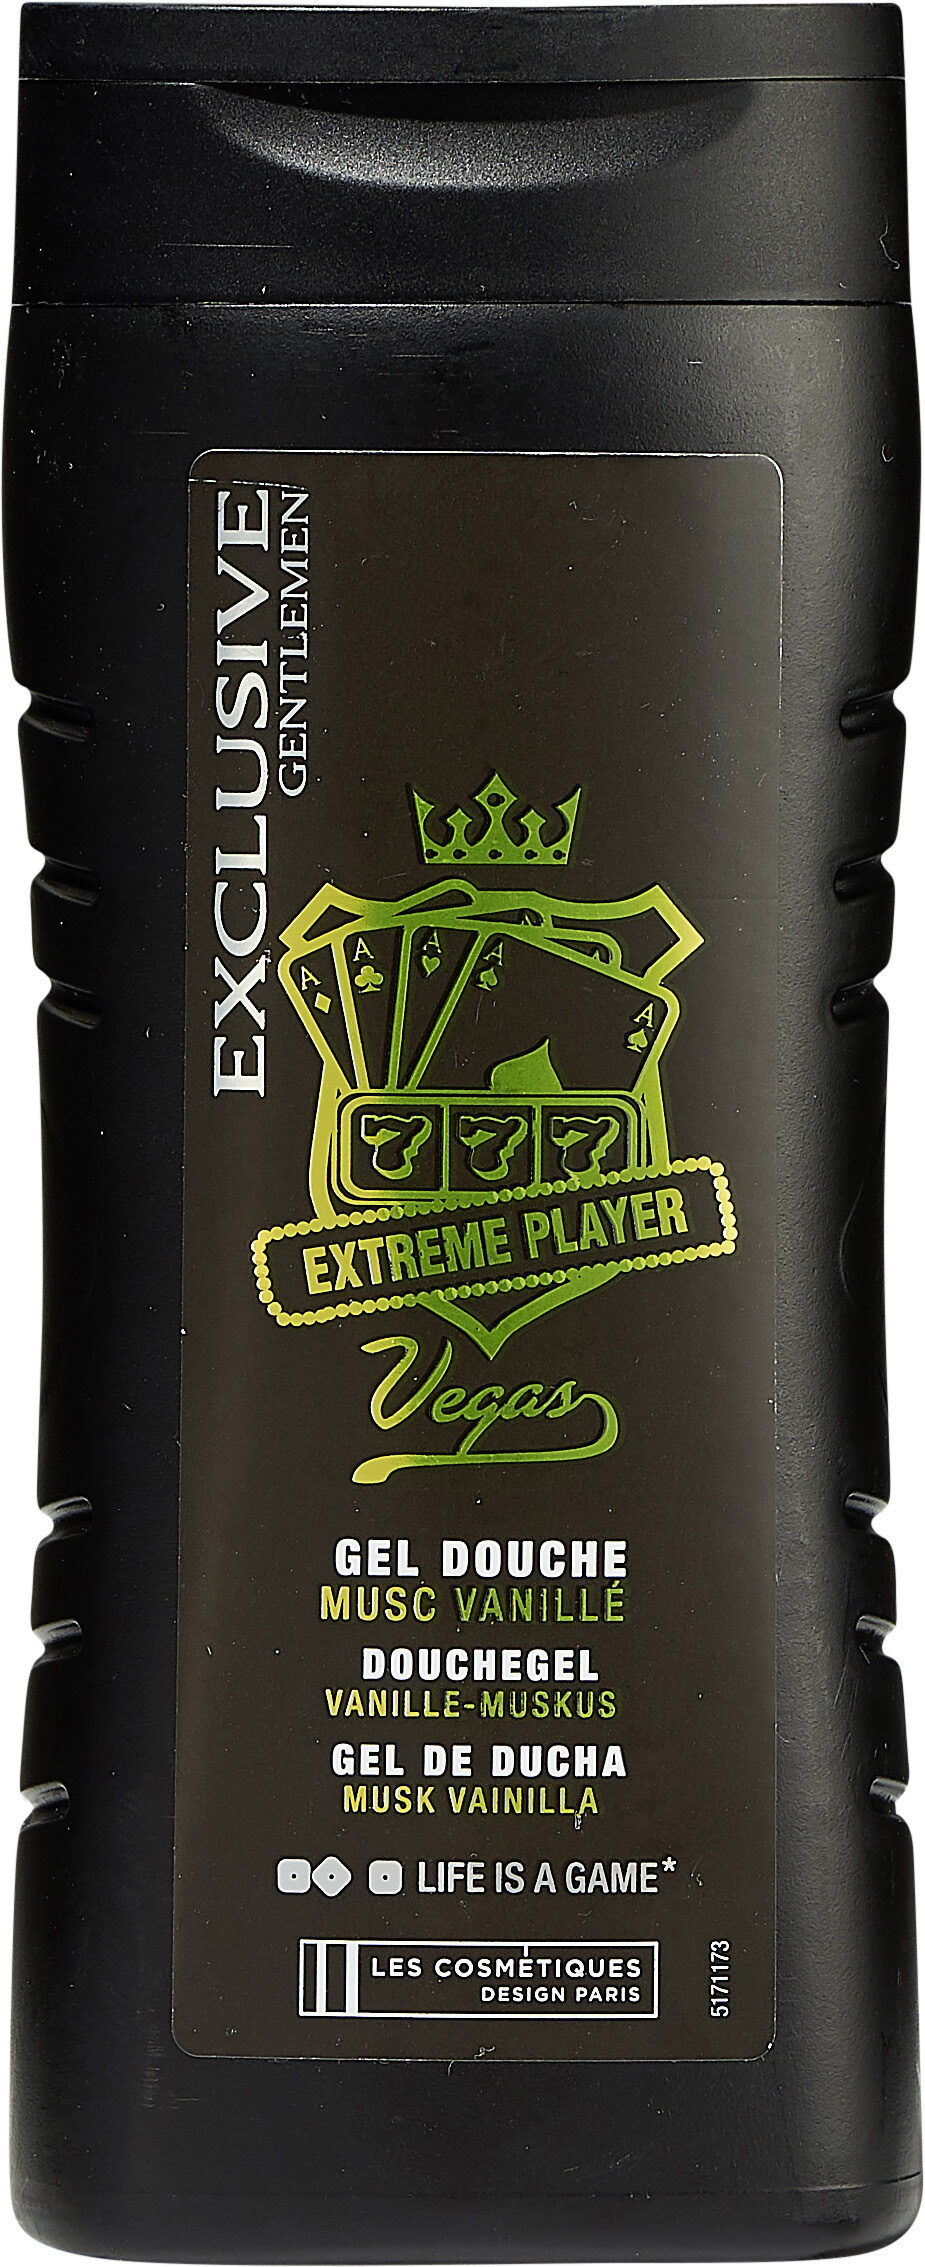 Exclusive Gentlemen Extreme Player Vegas Gel douche musc vanillé - Produit - fr